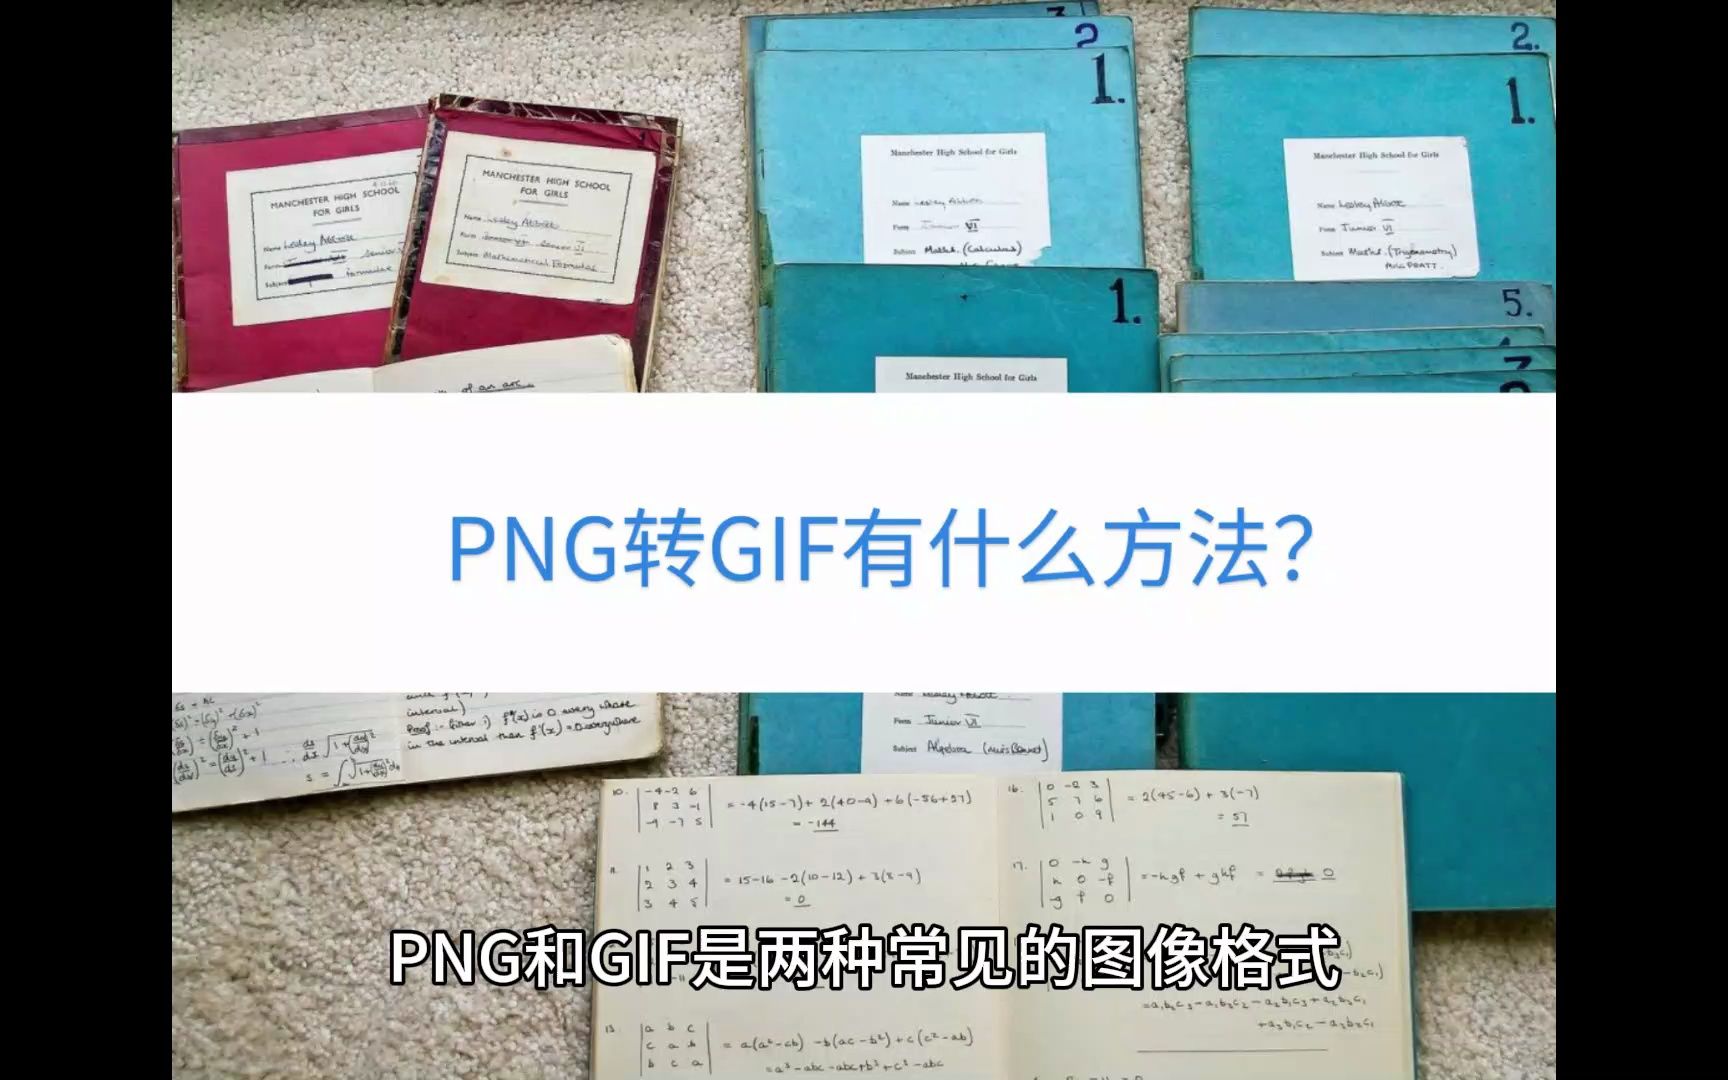 PNG转GIF有什么方法？方法有很多